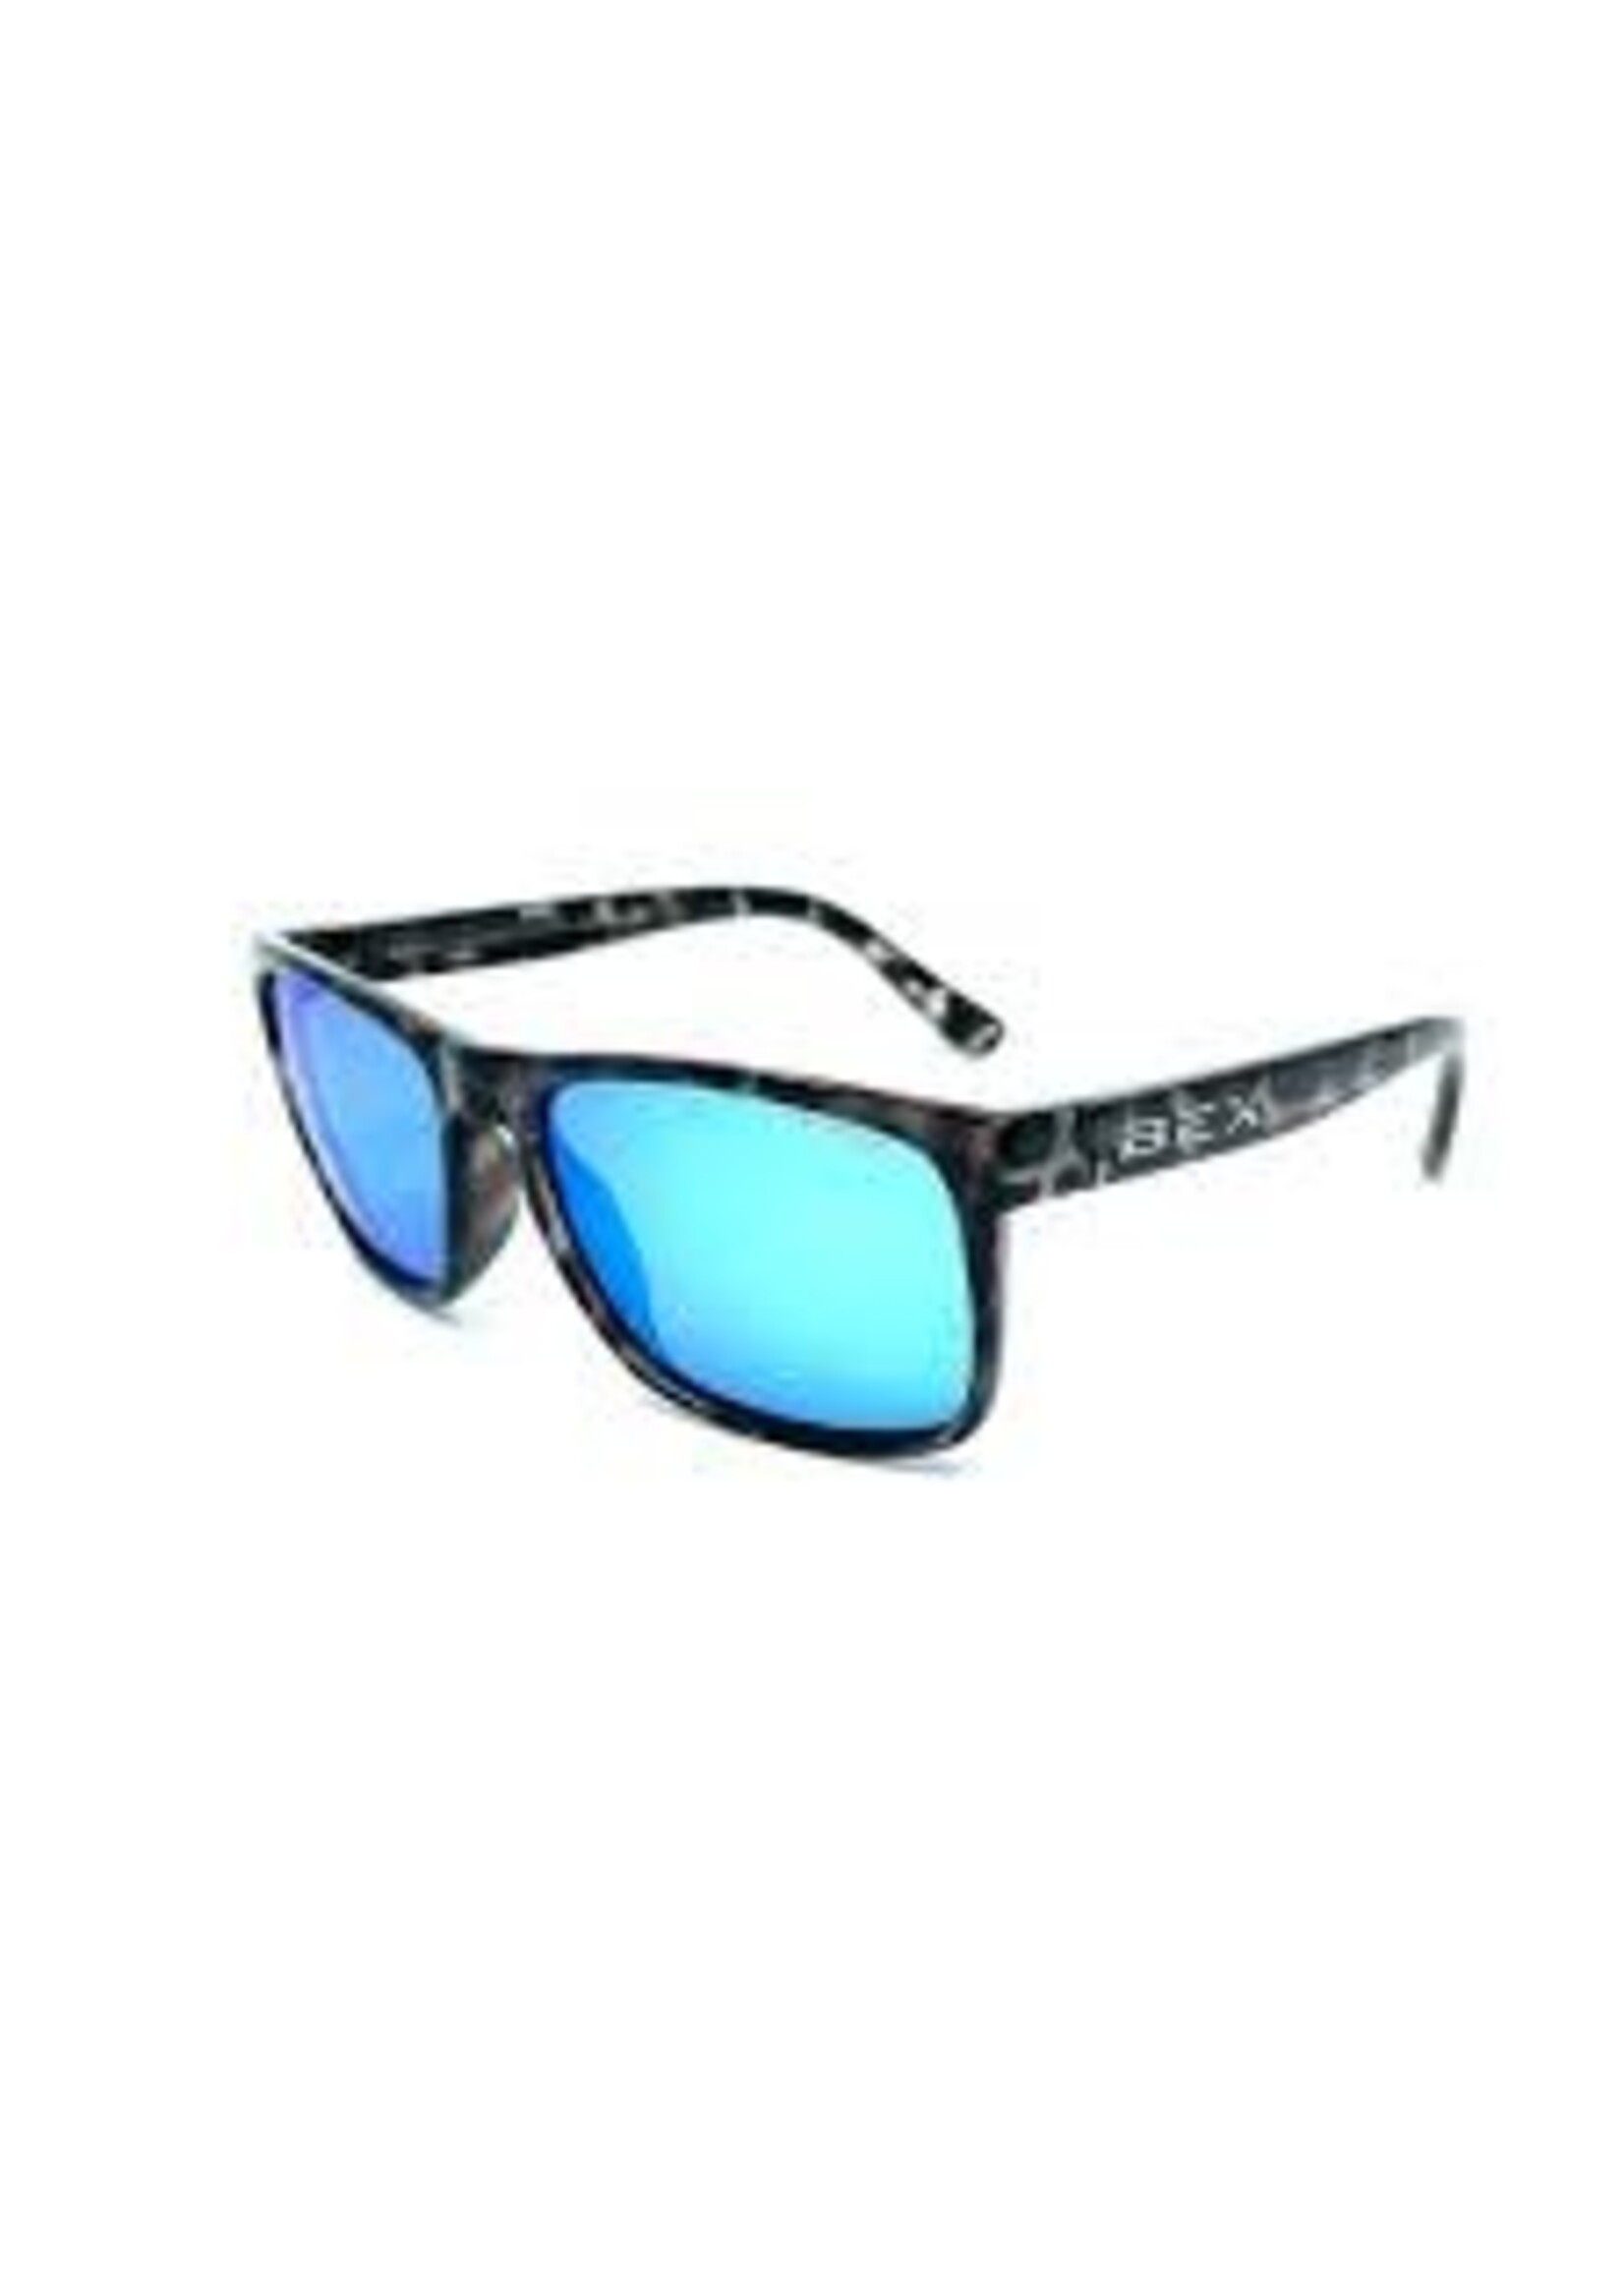 Bex Sunglasses Bex Sunglasses - Jaebyrd ll